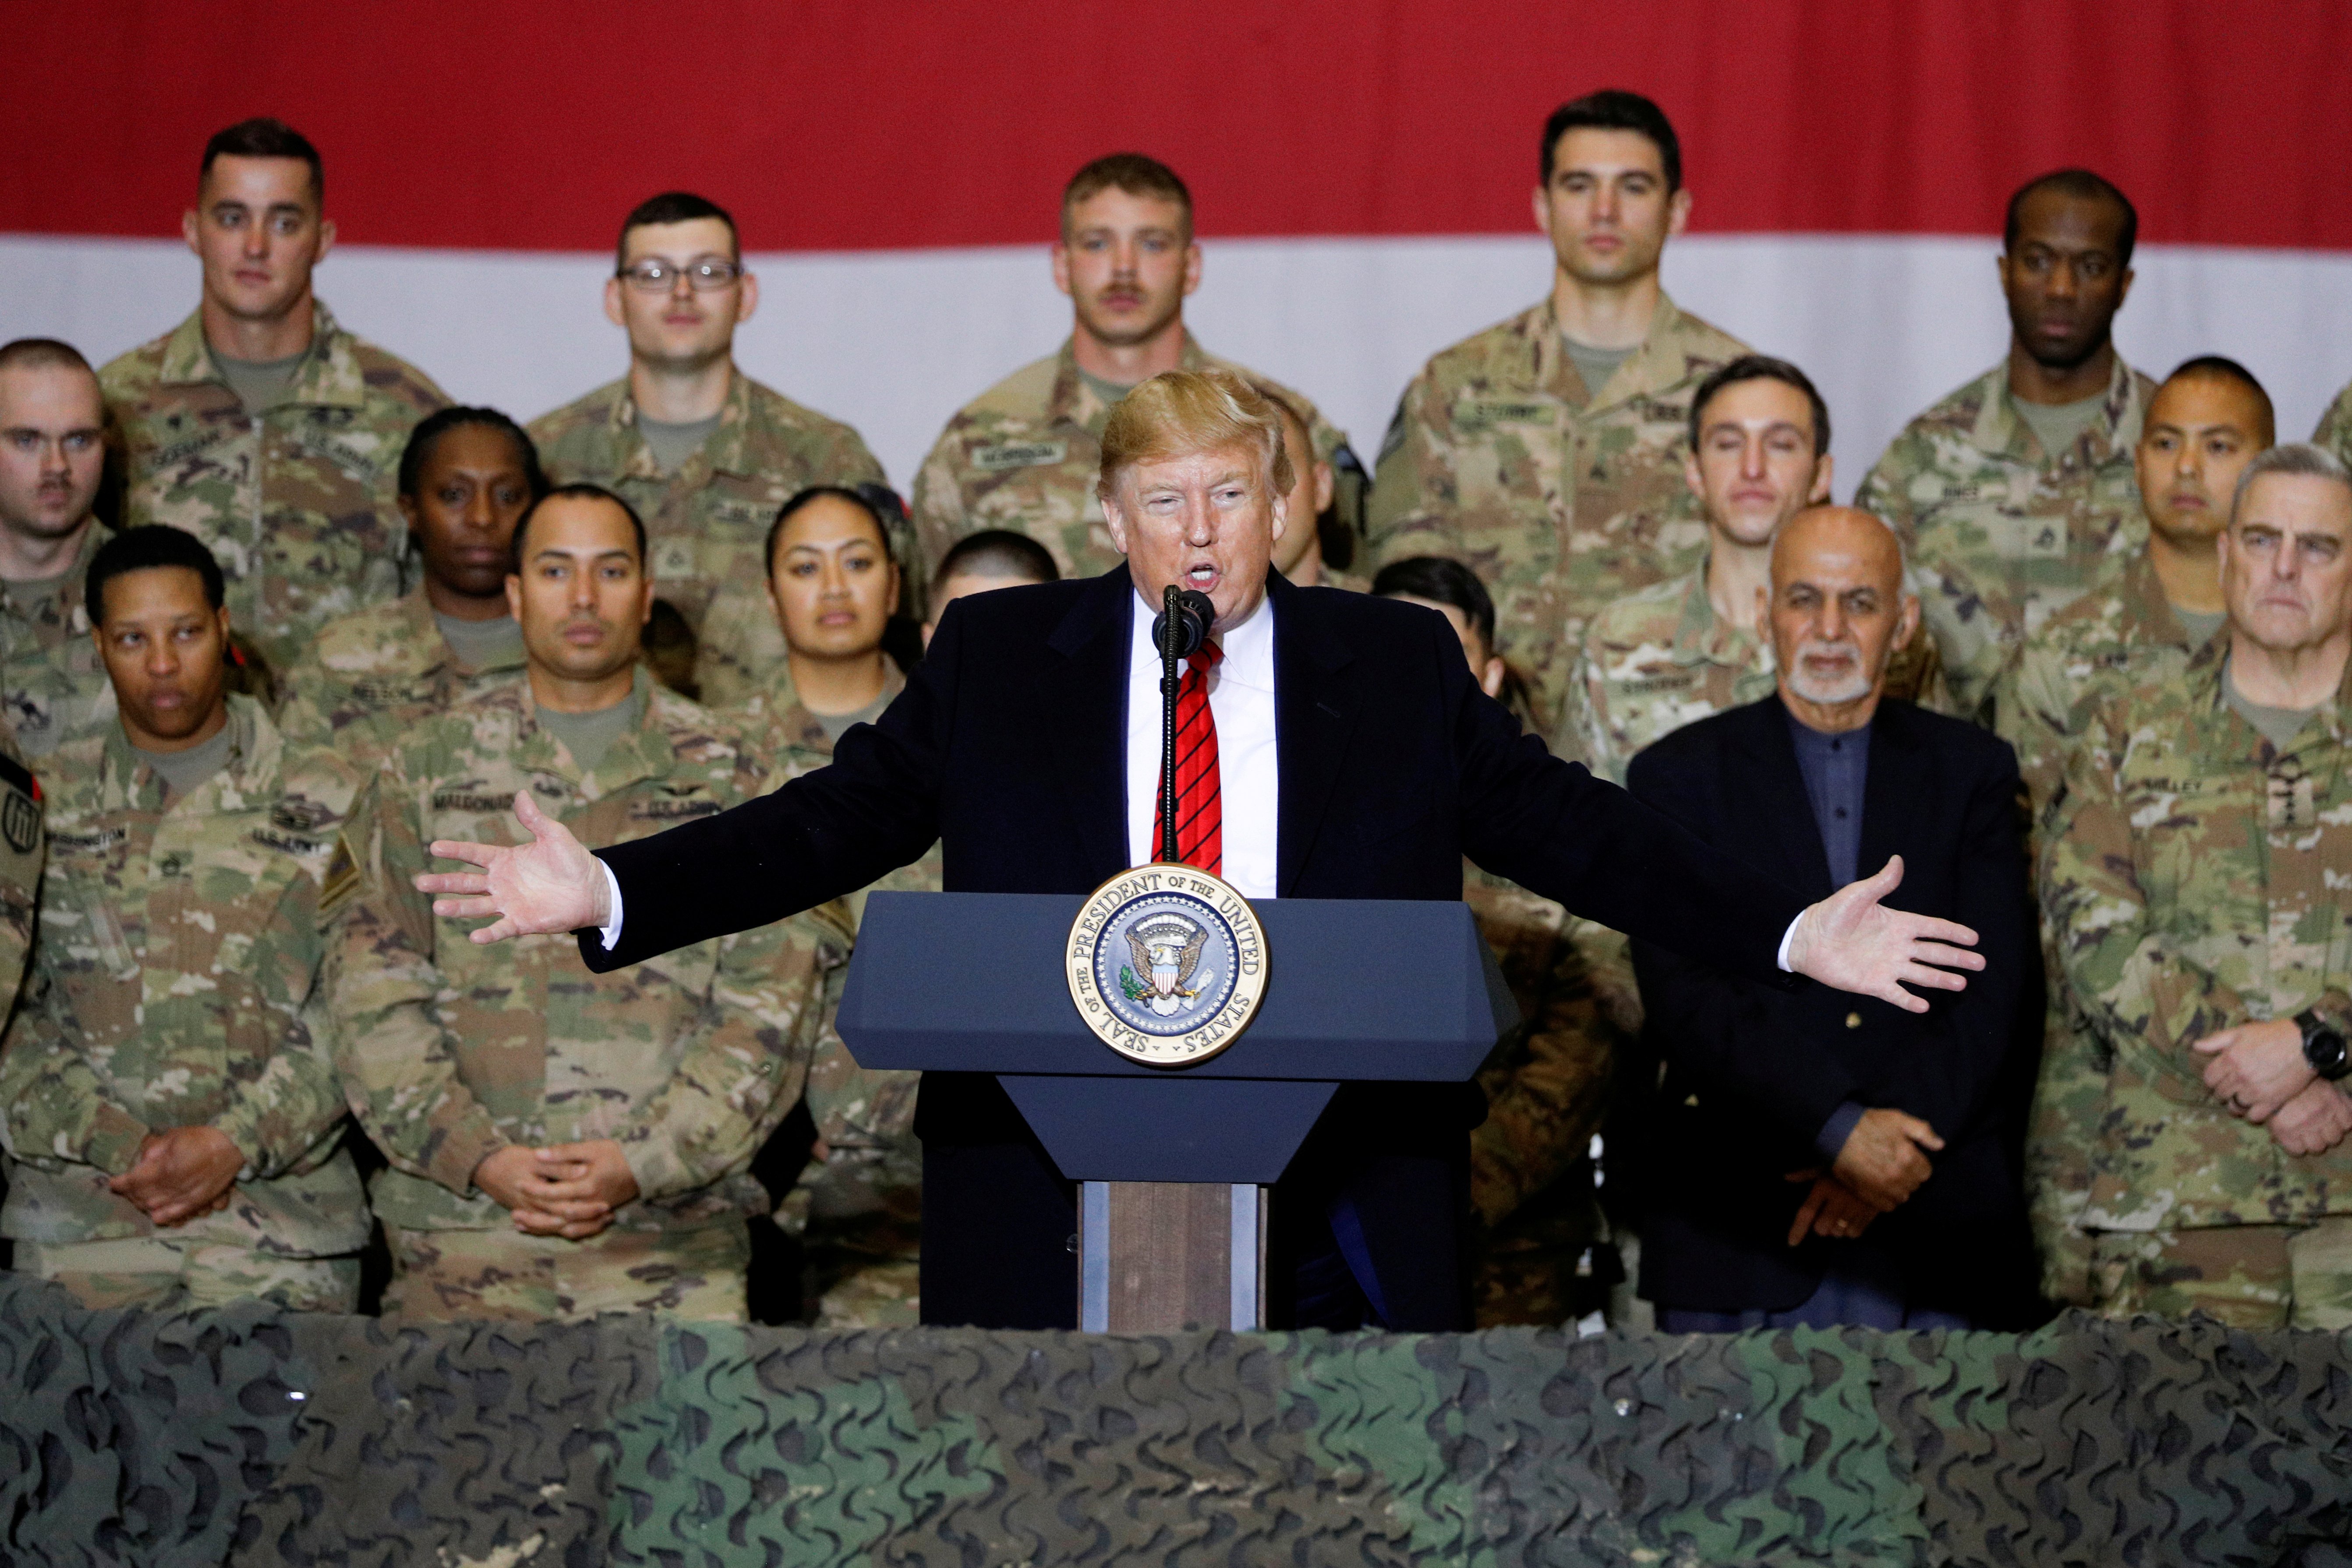 U.S. President Donald Trump delivers remarks to U.S. troops, with Afghanistan President Ashraf Ghani standing behind him, during an unannounced visit to Bagram Air Base, Afghanistan, November 28, 2019. REUTERS/Tom Brenner 